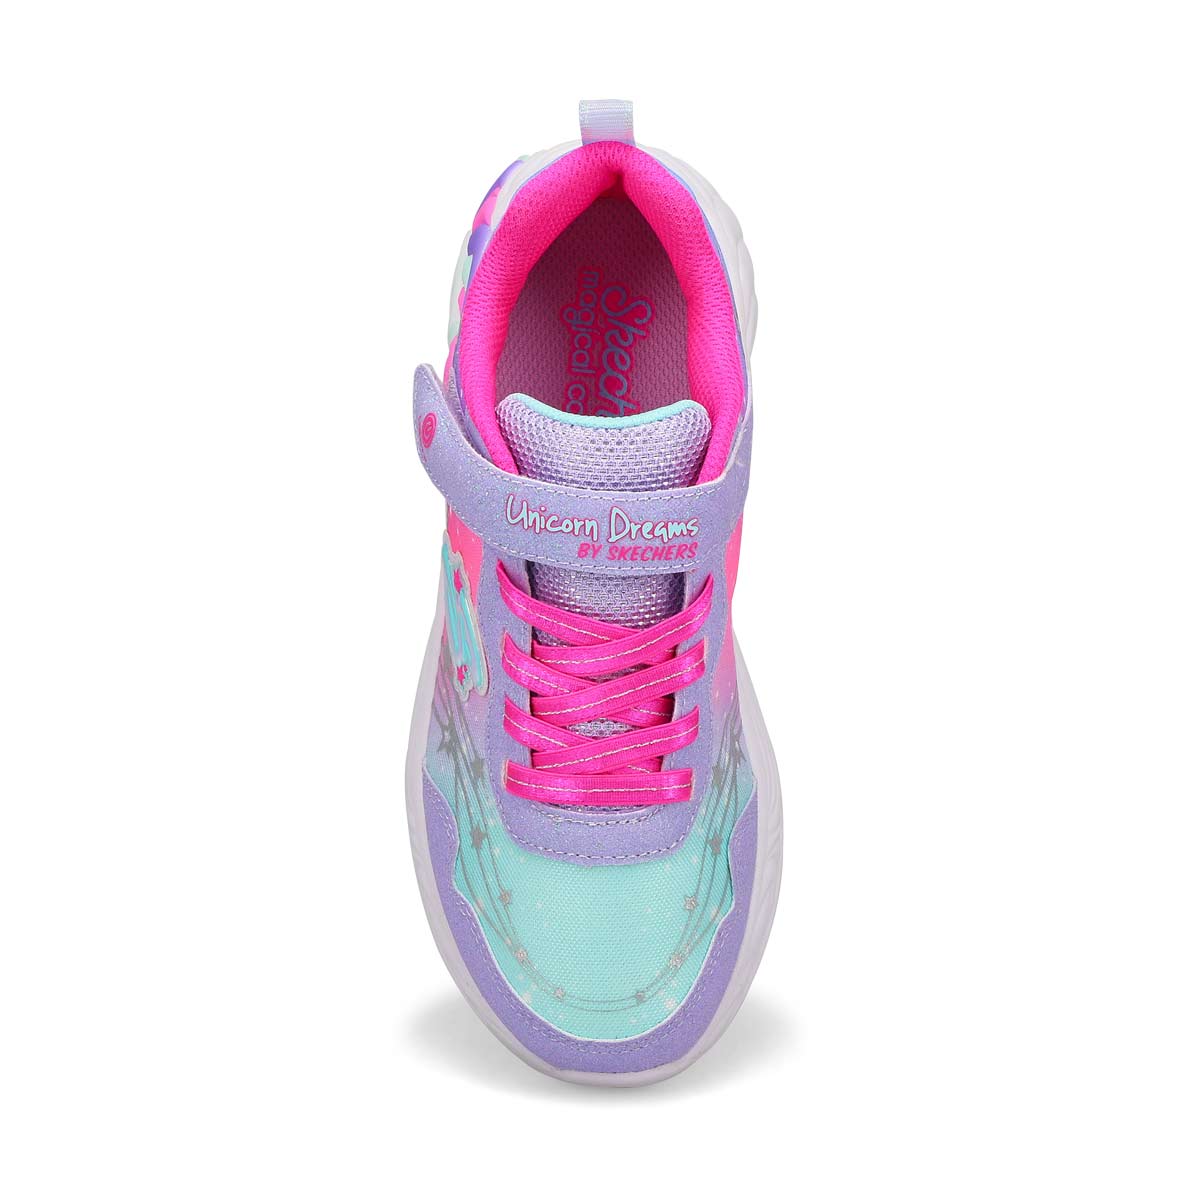 Girls' Unicorn Dreams Sneaker - Lavender/Hot Pink